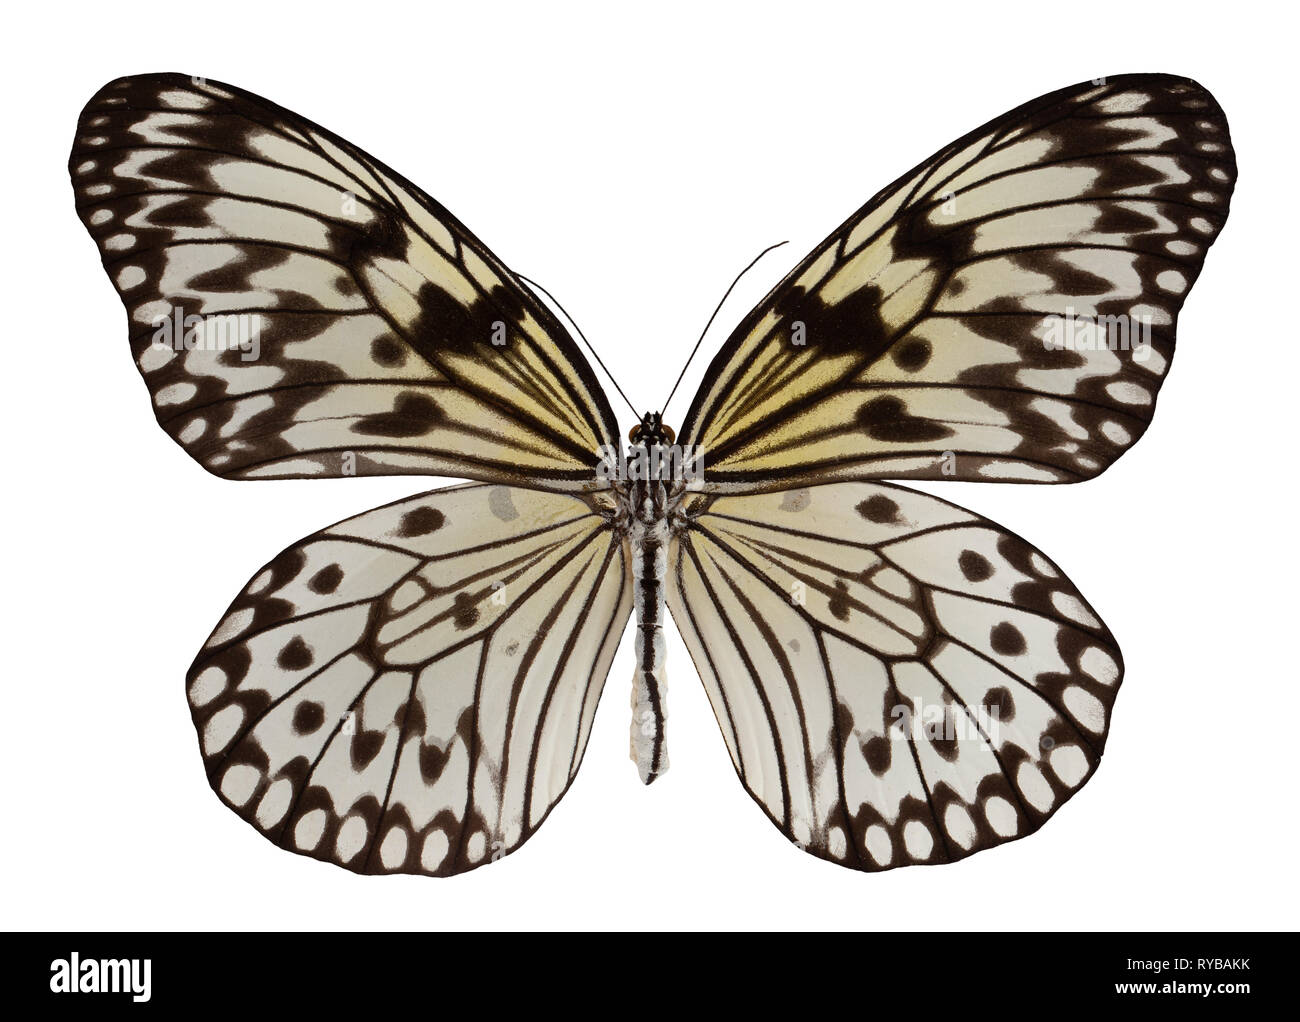 Butterfly idea leuconoe isolated on white background. Stock Photo